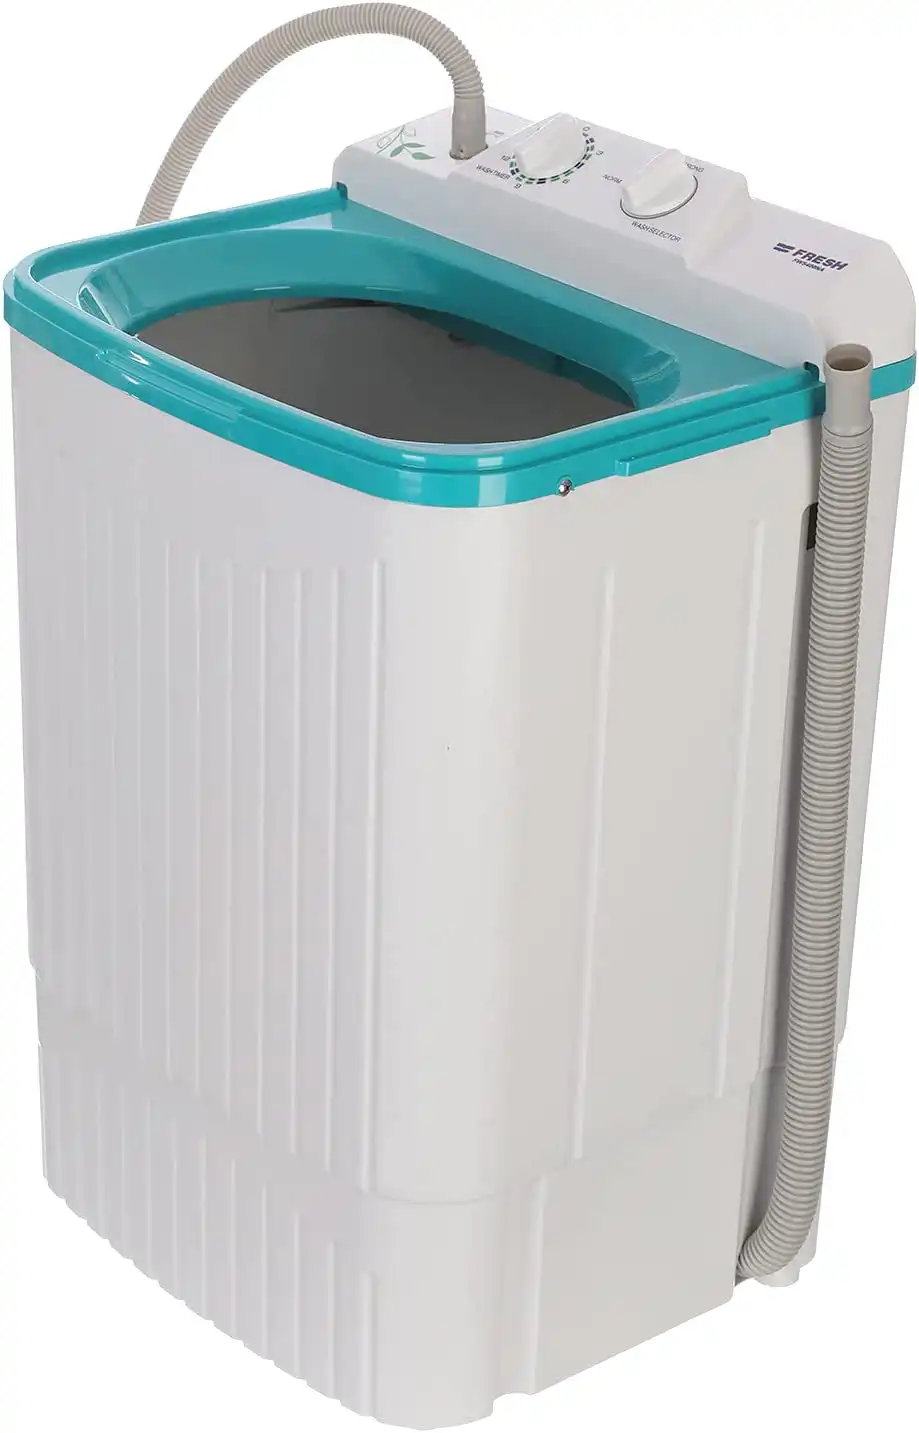 Fresh Washing Machine, 4 KG, Plastic Body, One Tub, White X Green, FWS400NA